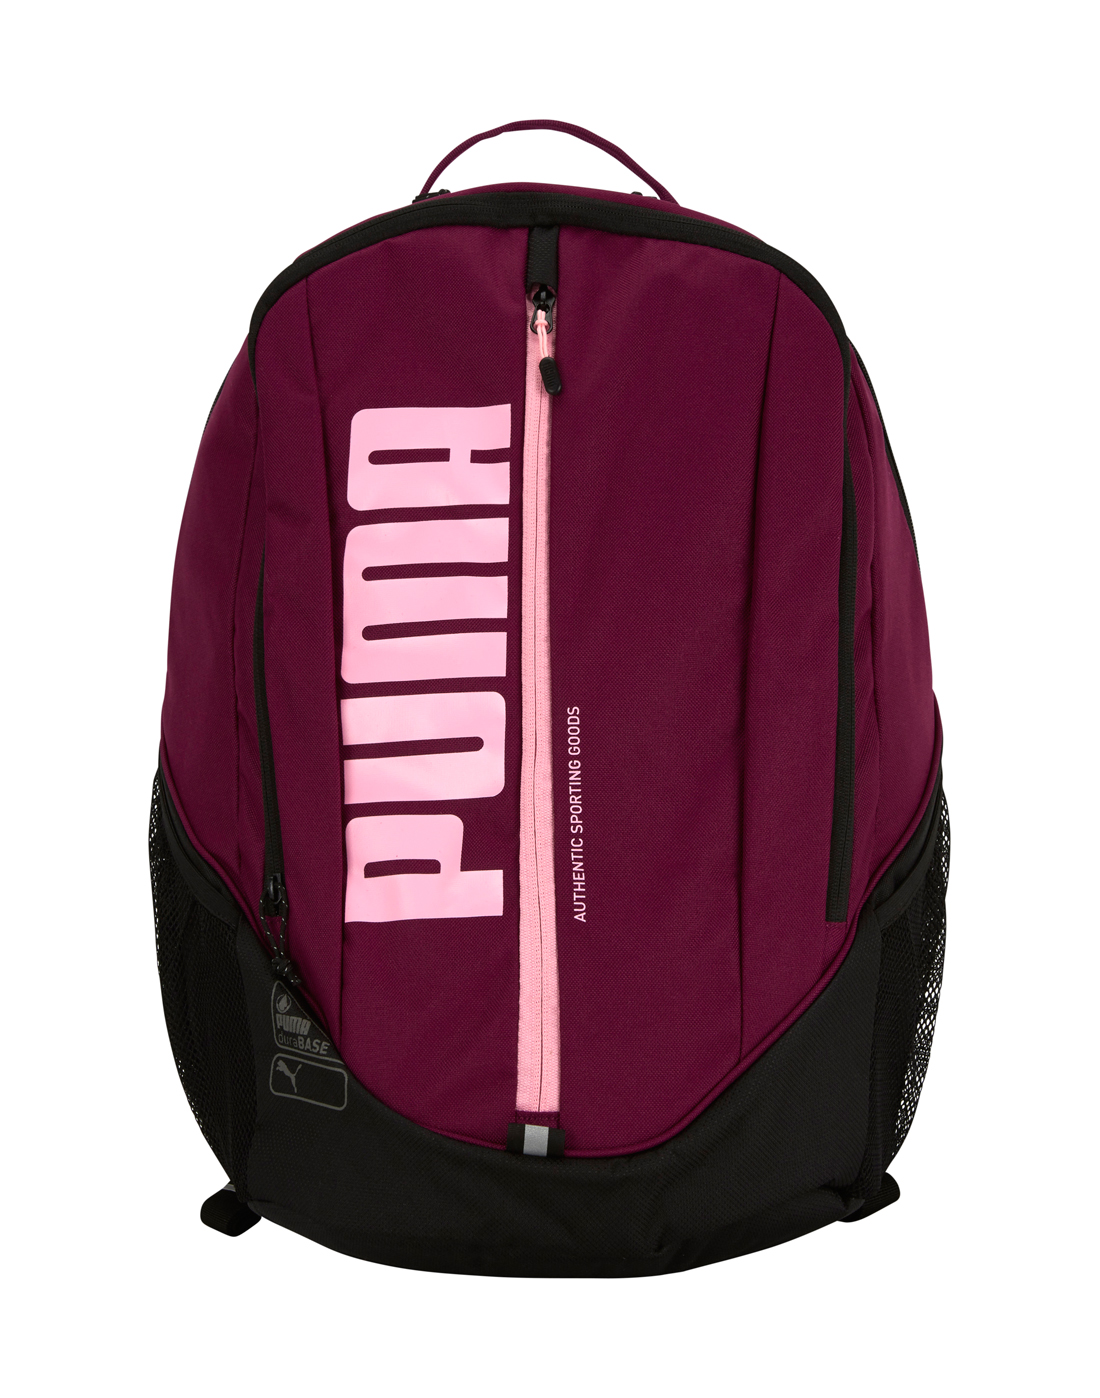 puma backpack purple